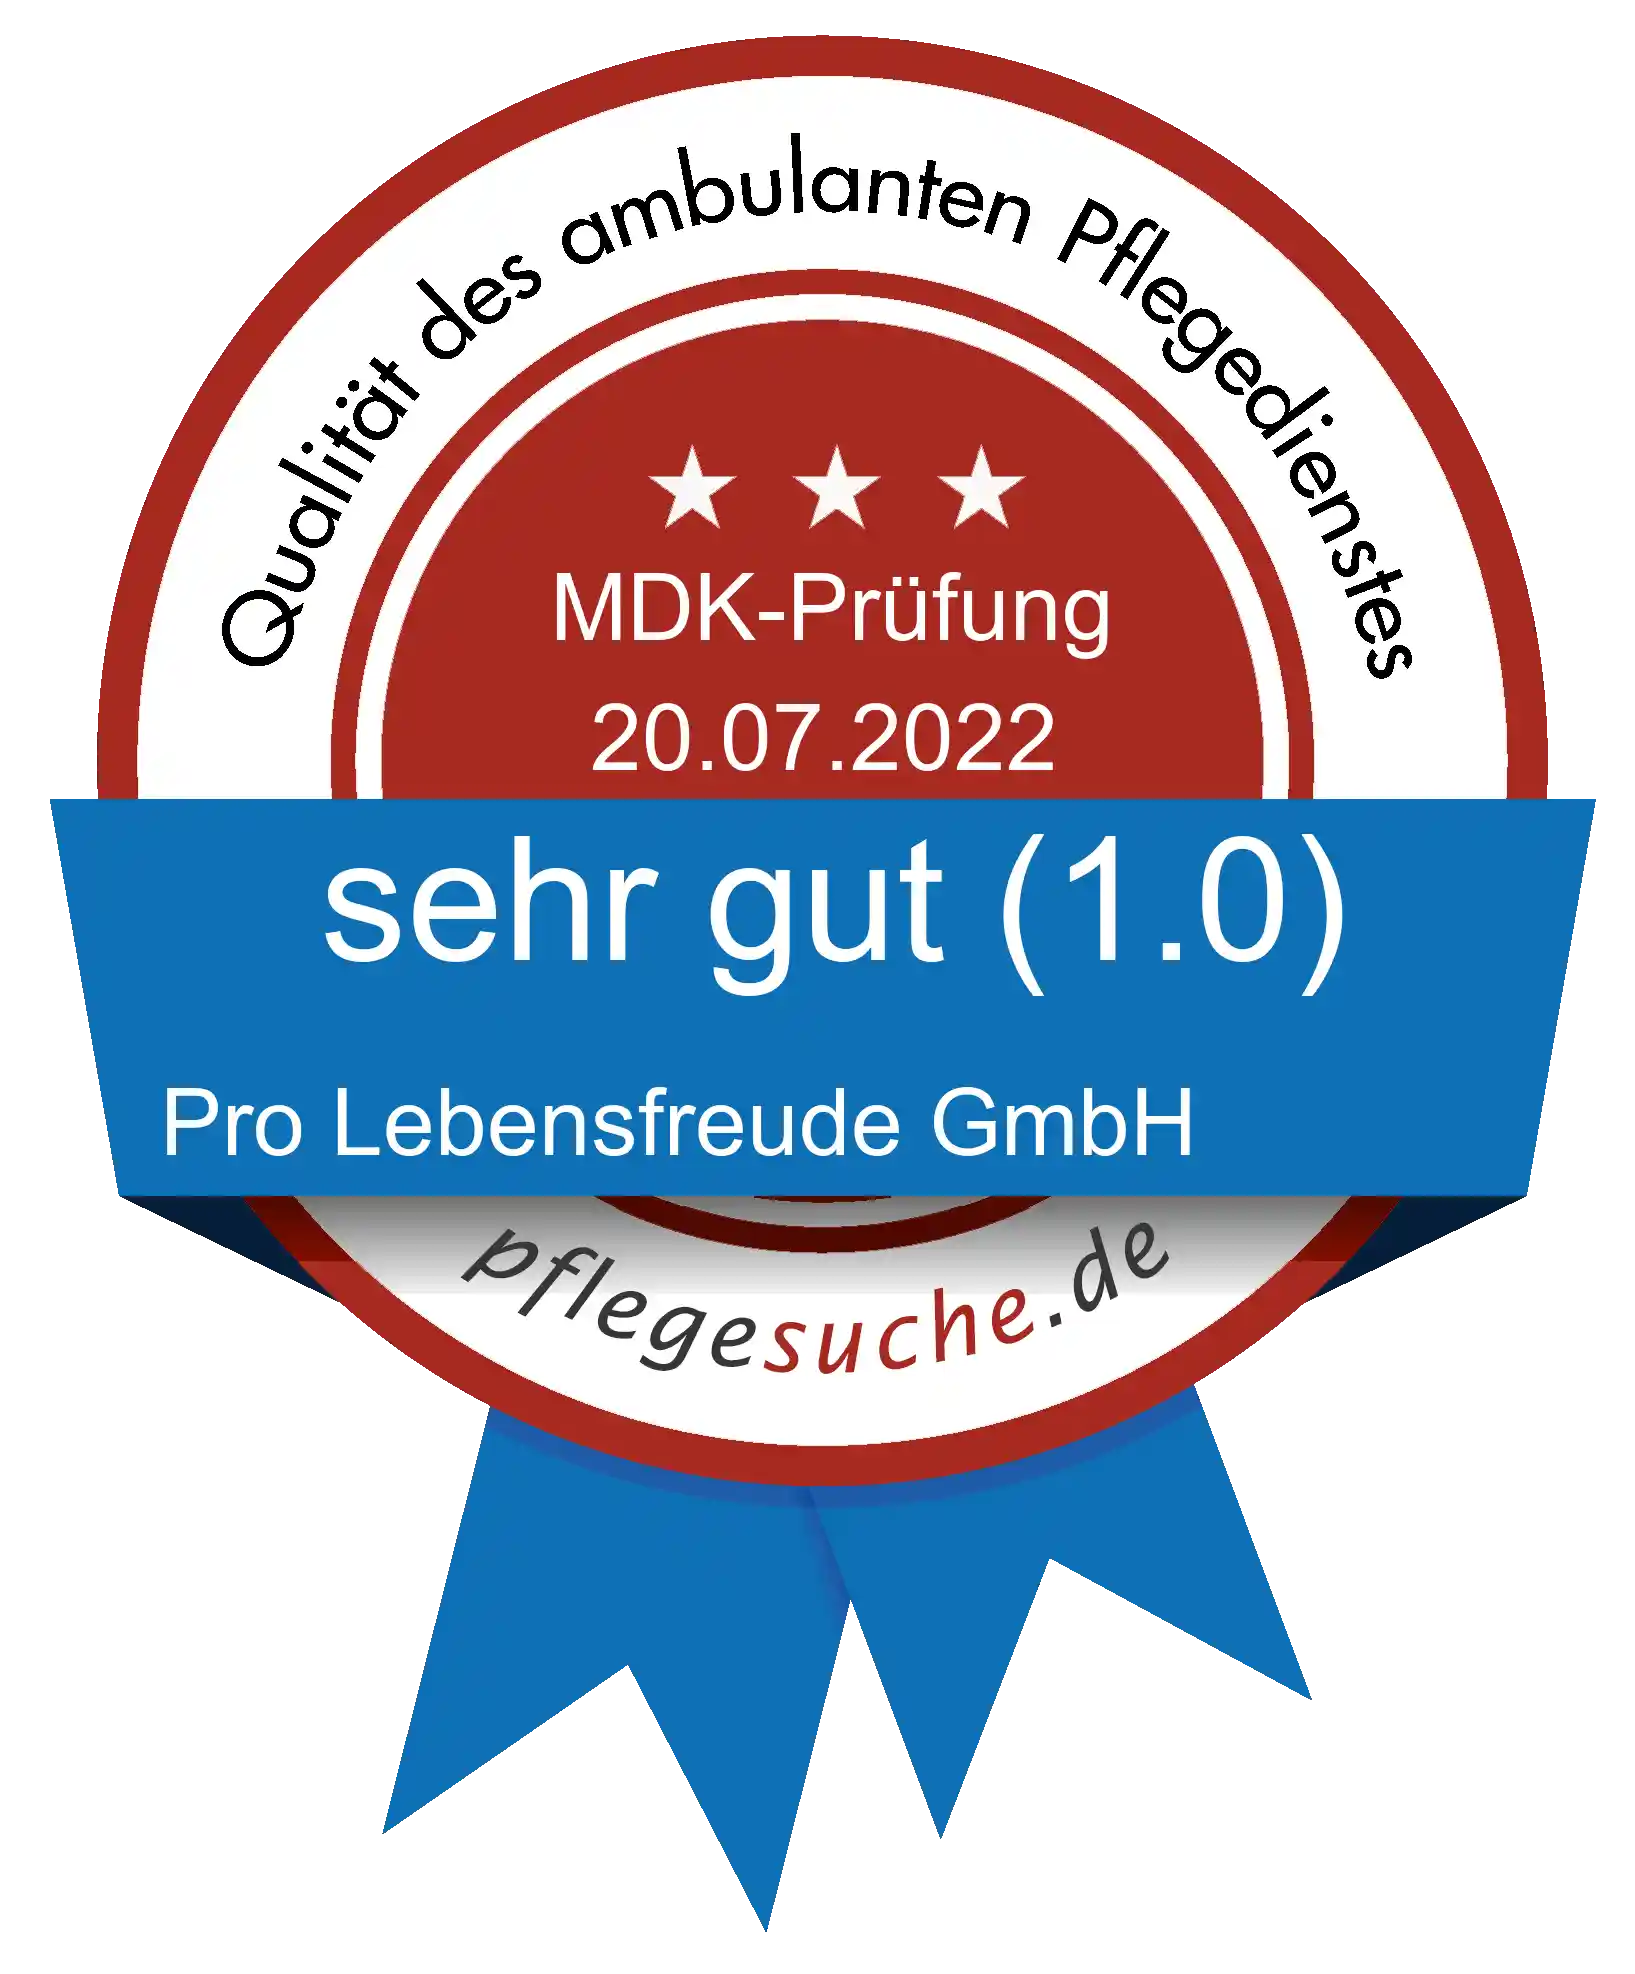 Siegel Benotung: Pro Lebensfreude GmbH